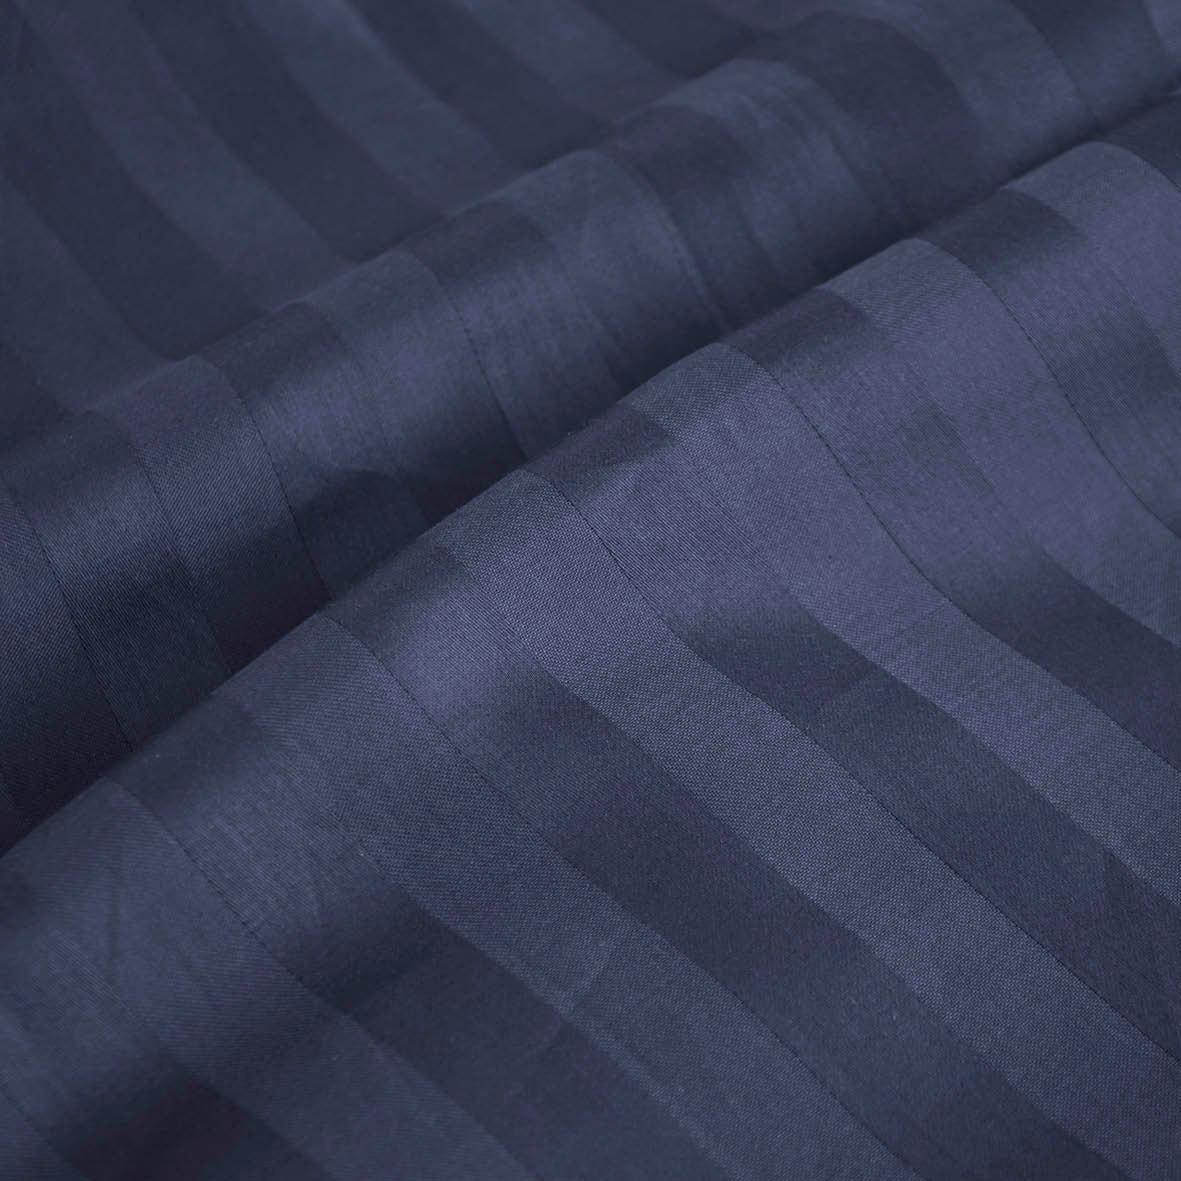 Pillowcase(s) cotton satin - Jacquard woven - dobby stripe dark blue